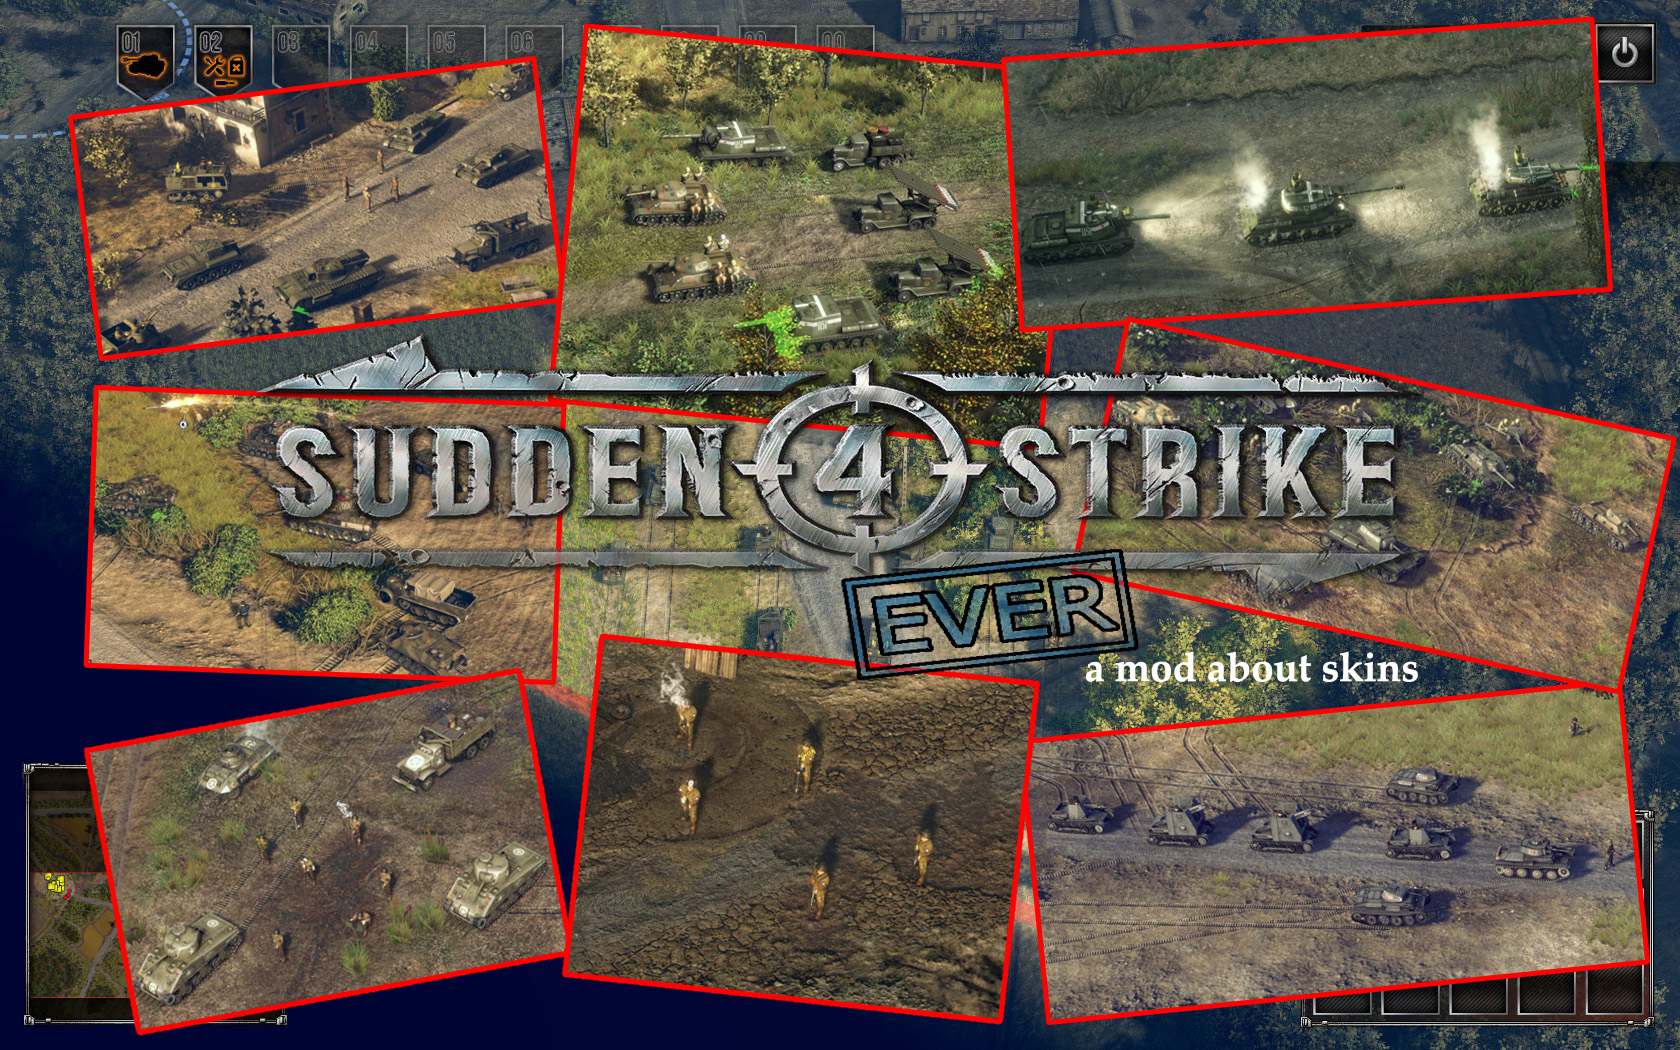 https://www.sudden-strike-maps.de/images/editor/sudden_strike_4ever_skins_mod_1_20181101_1645548188.jpg